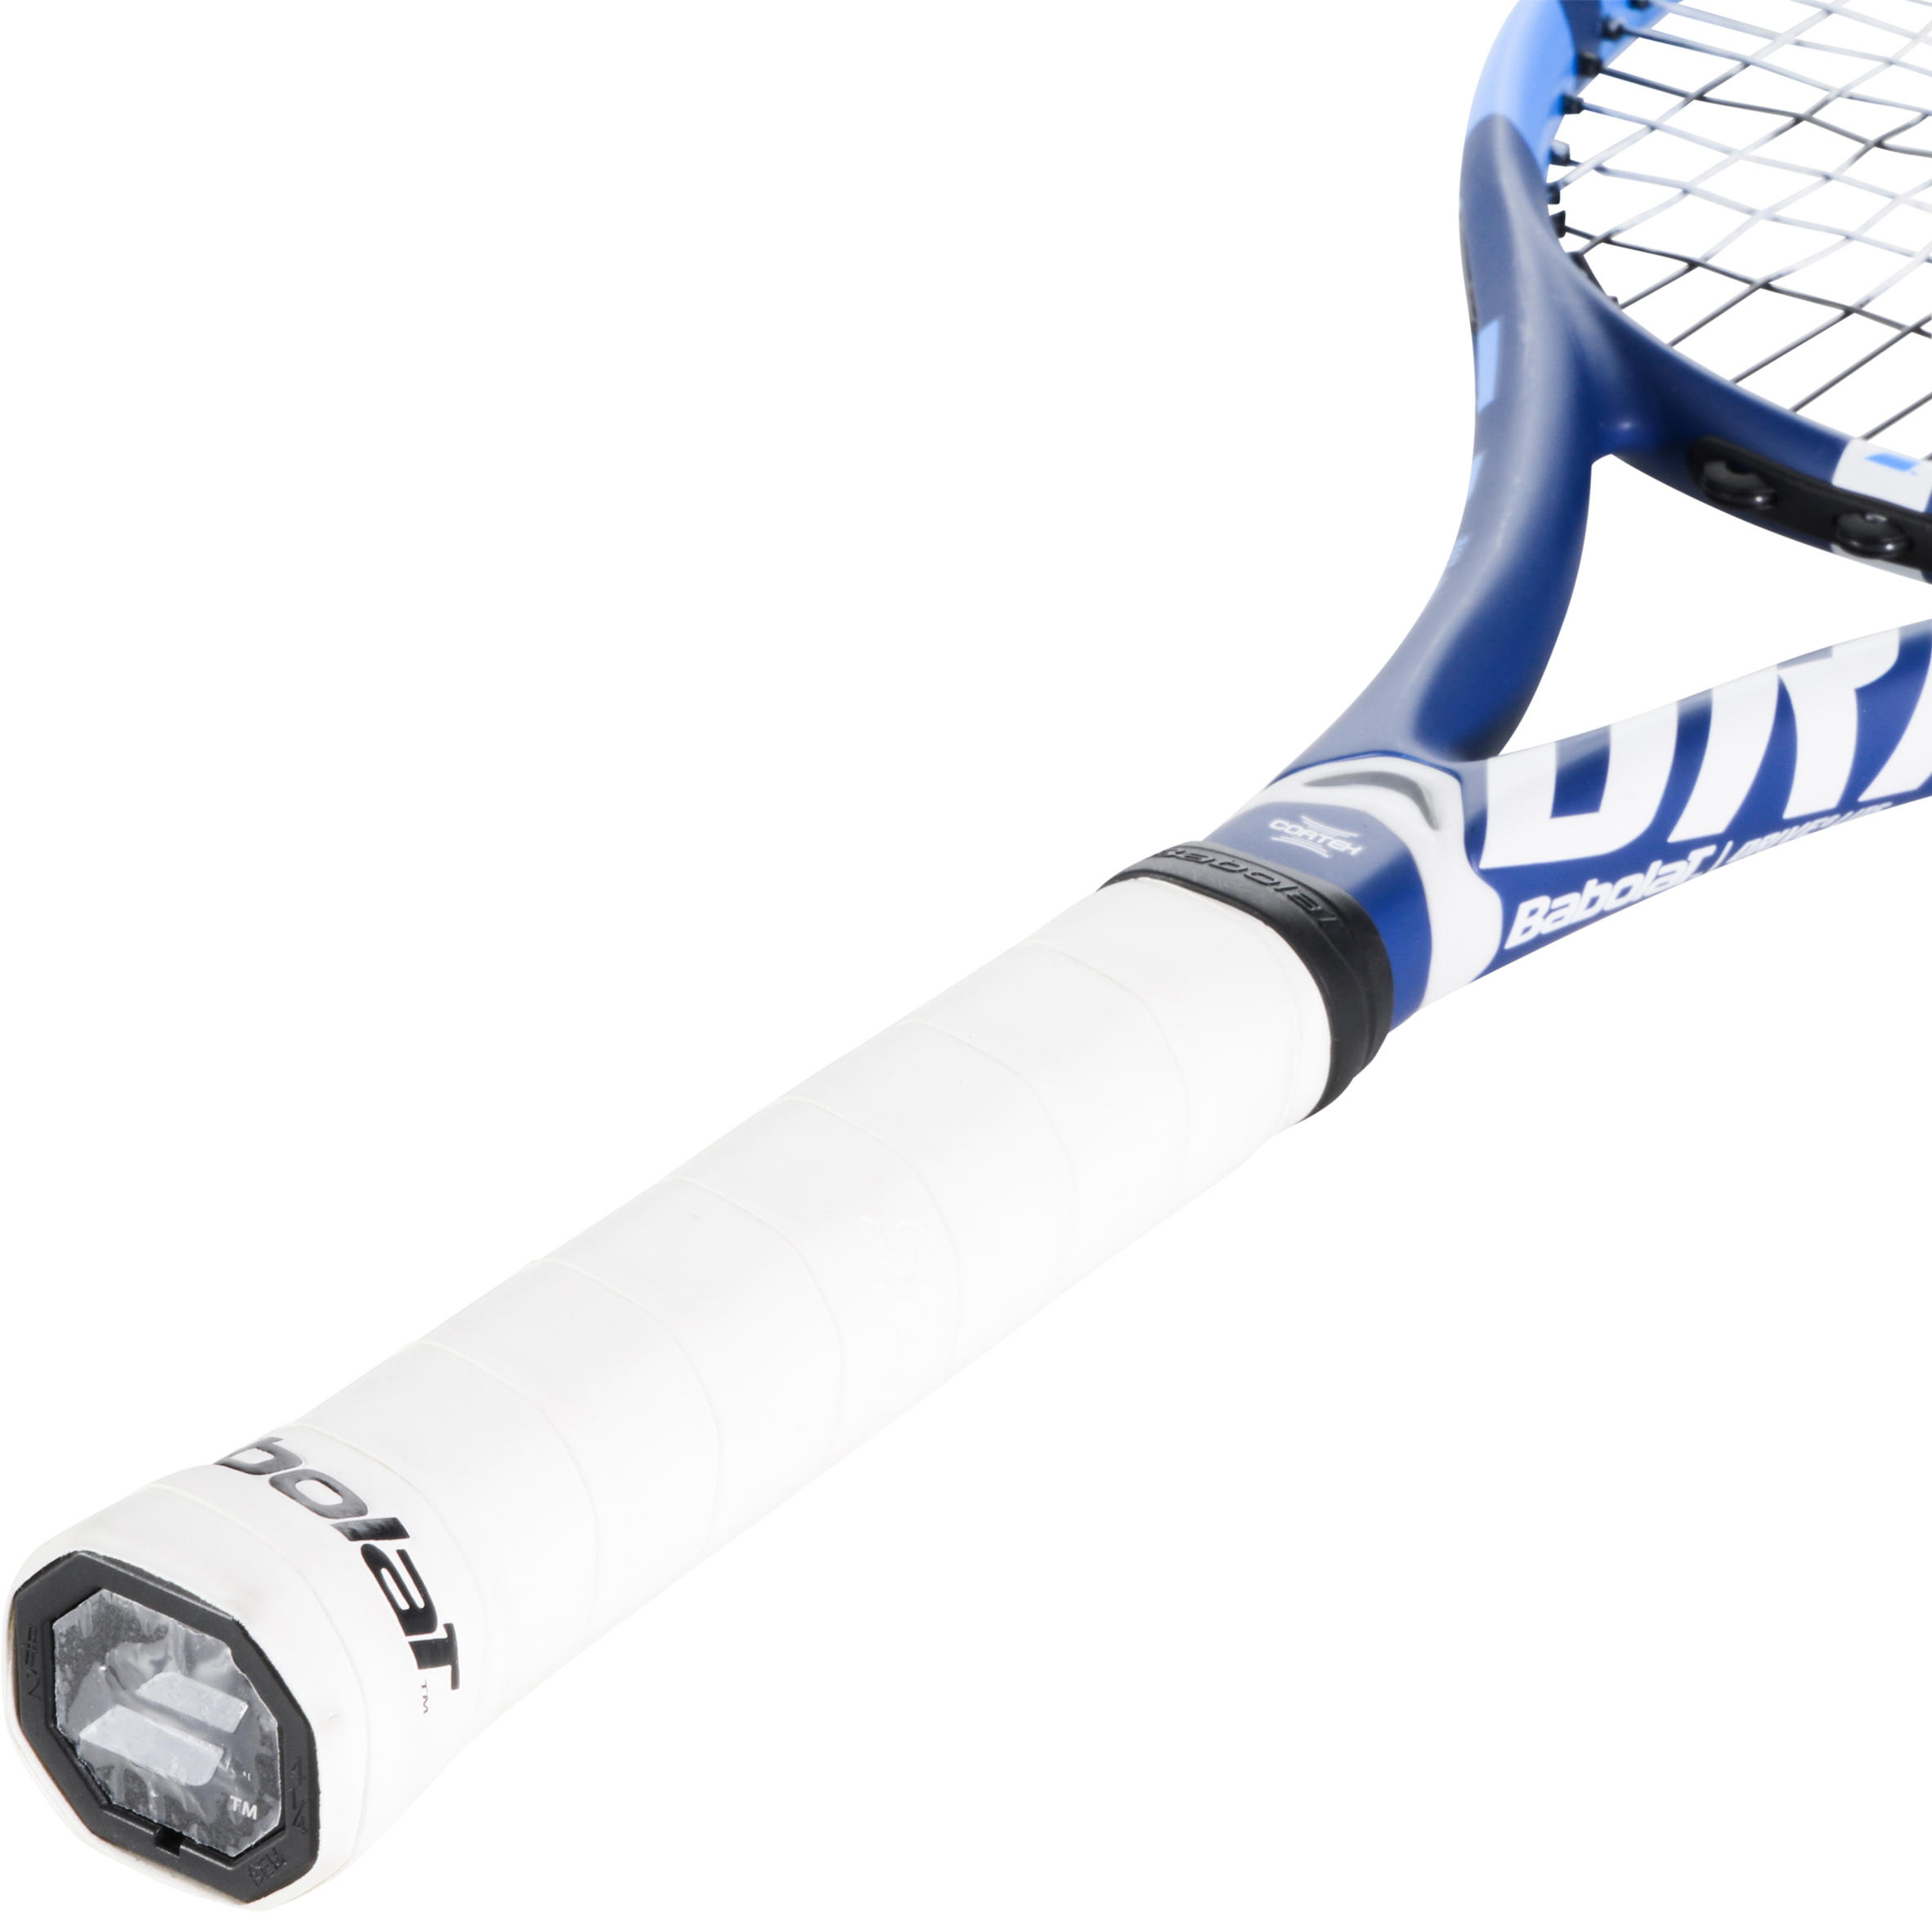 Drive G Lite Tennis Racket - Blue 9/10